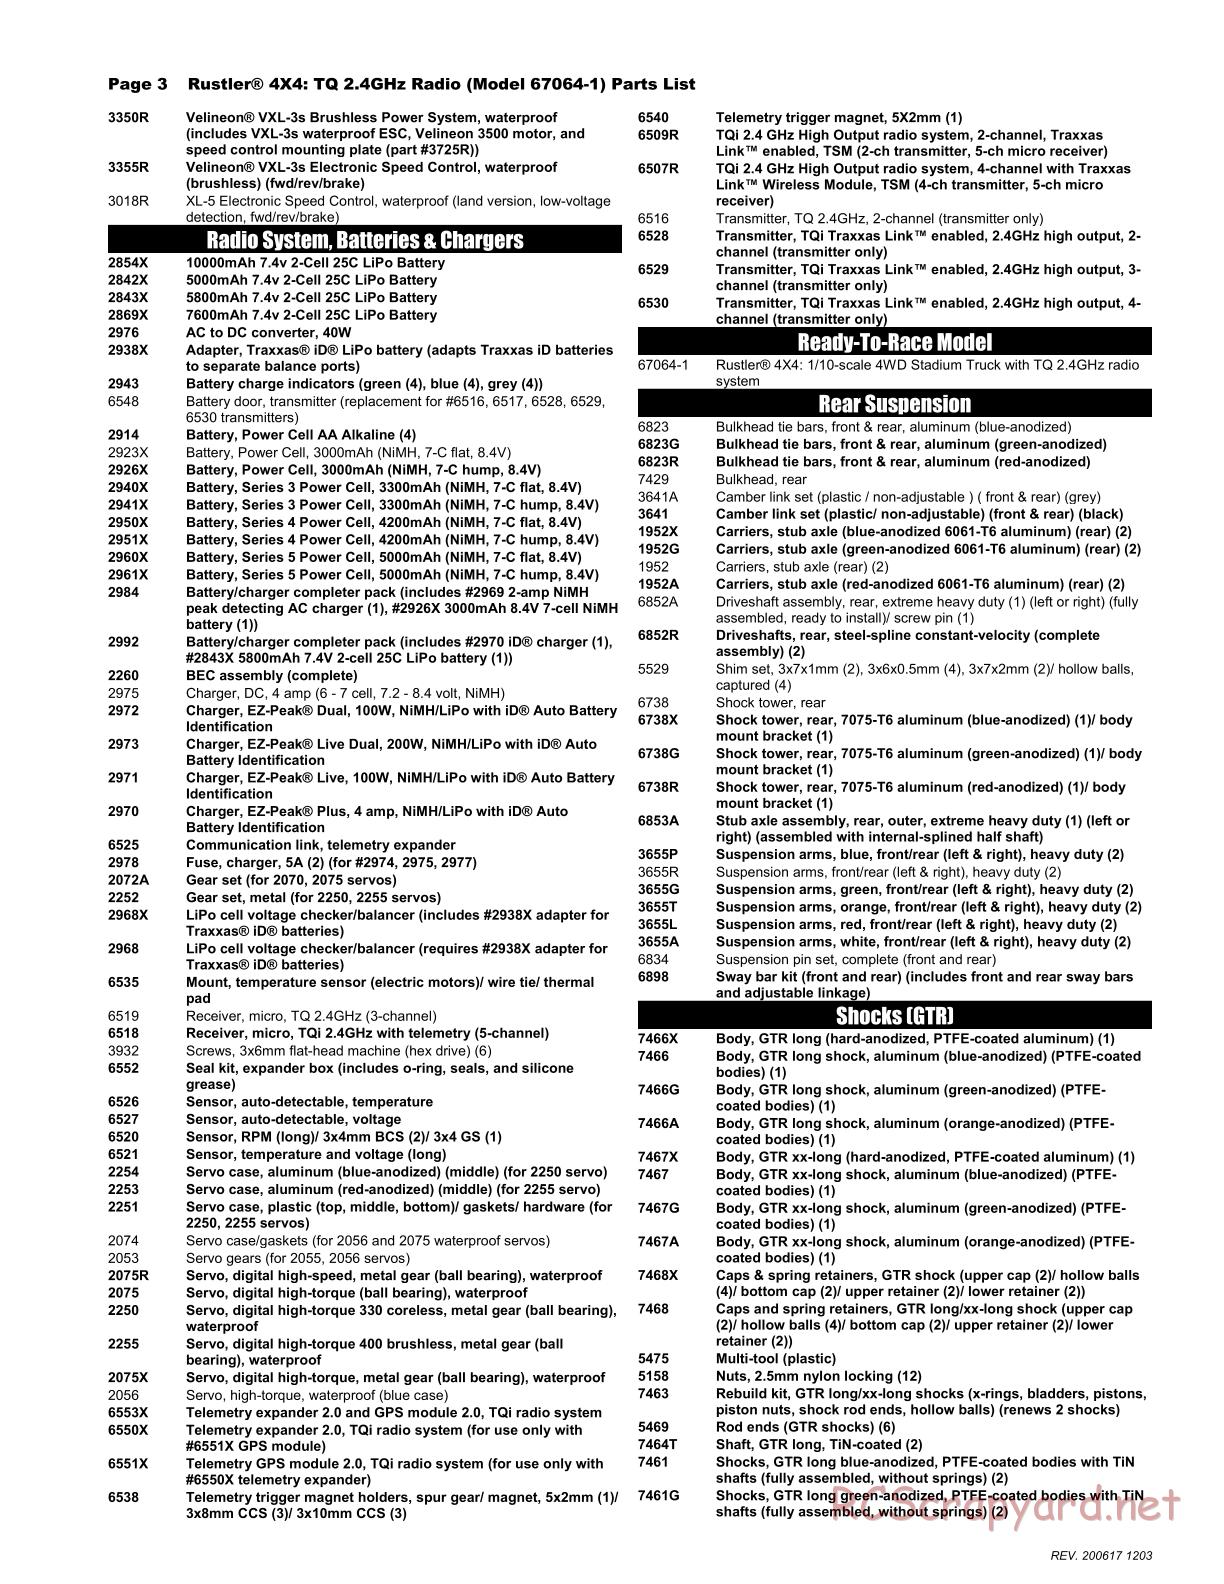 Traxxas - Rustler 4x4 XL-5 - Parts List - Page 3